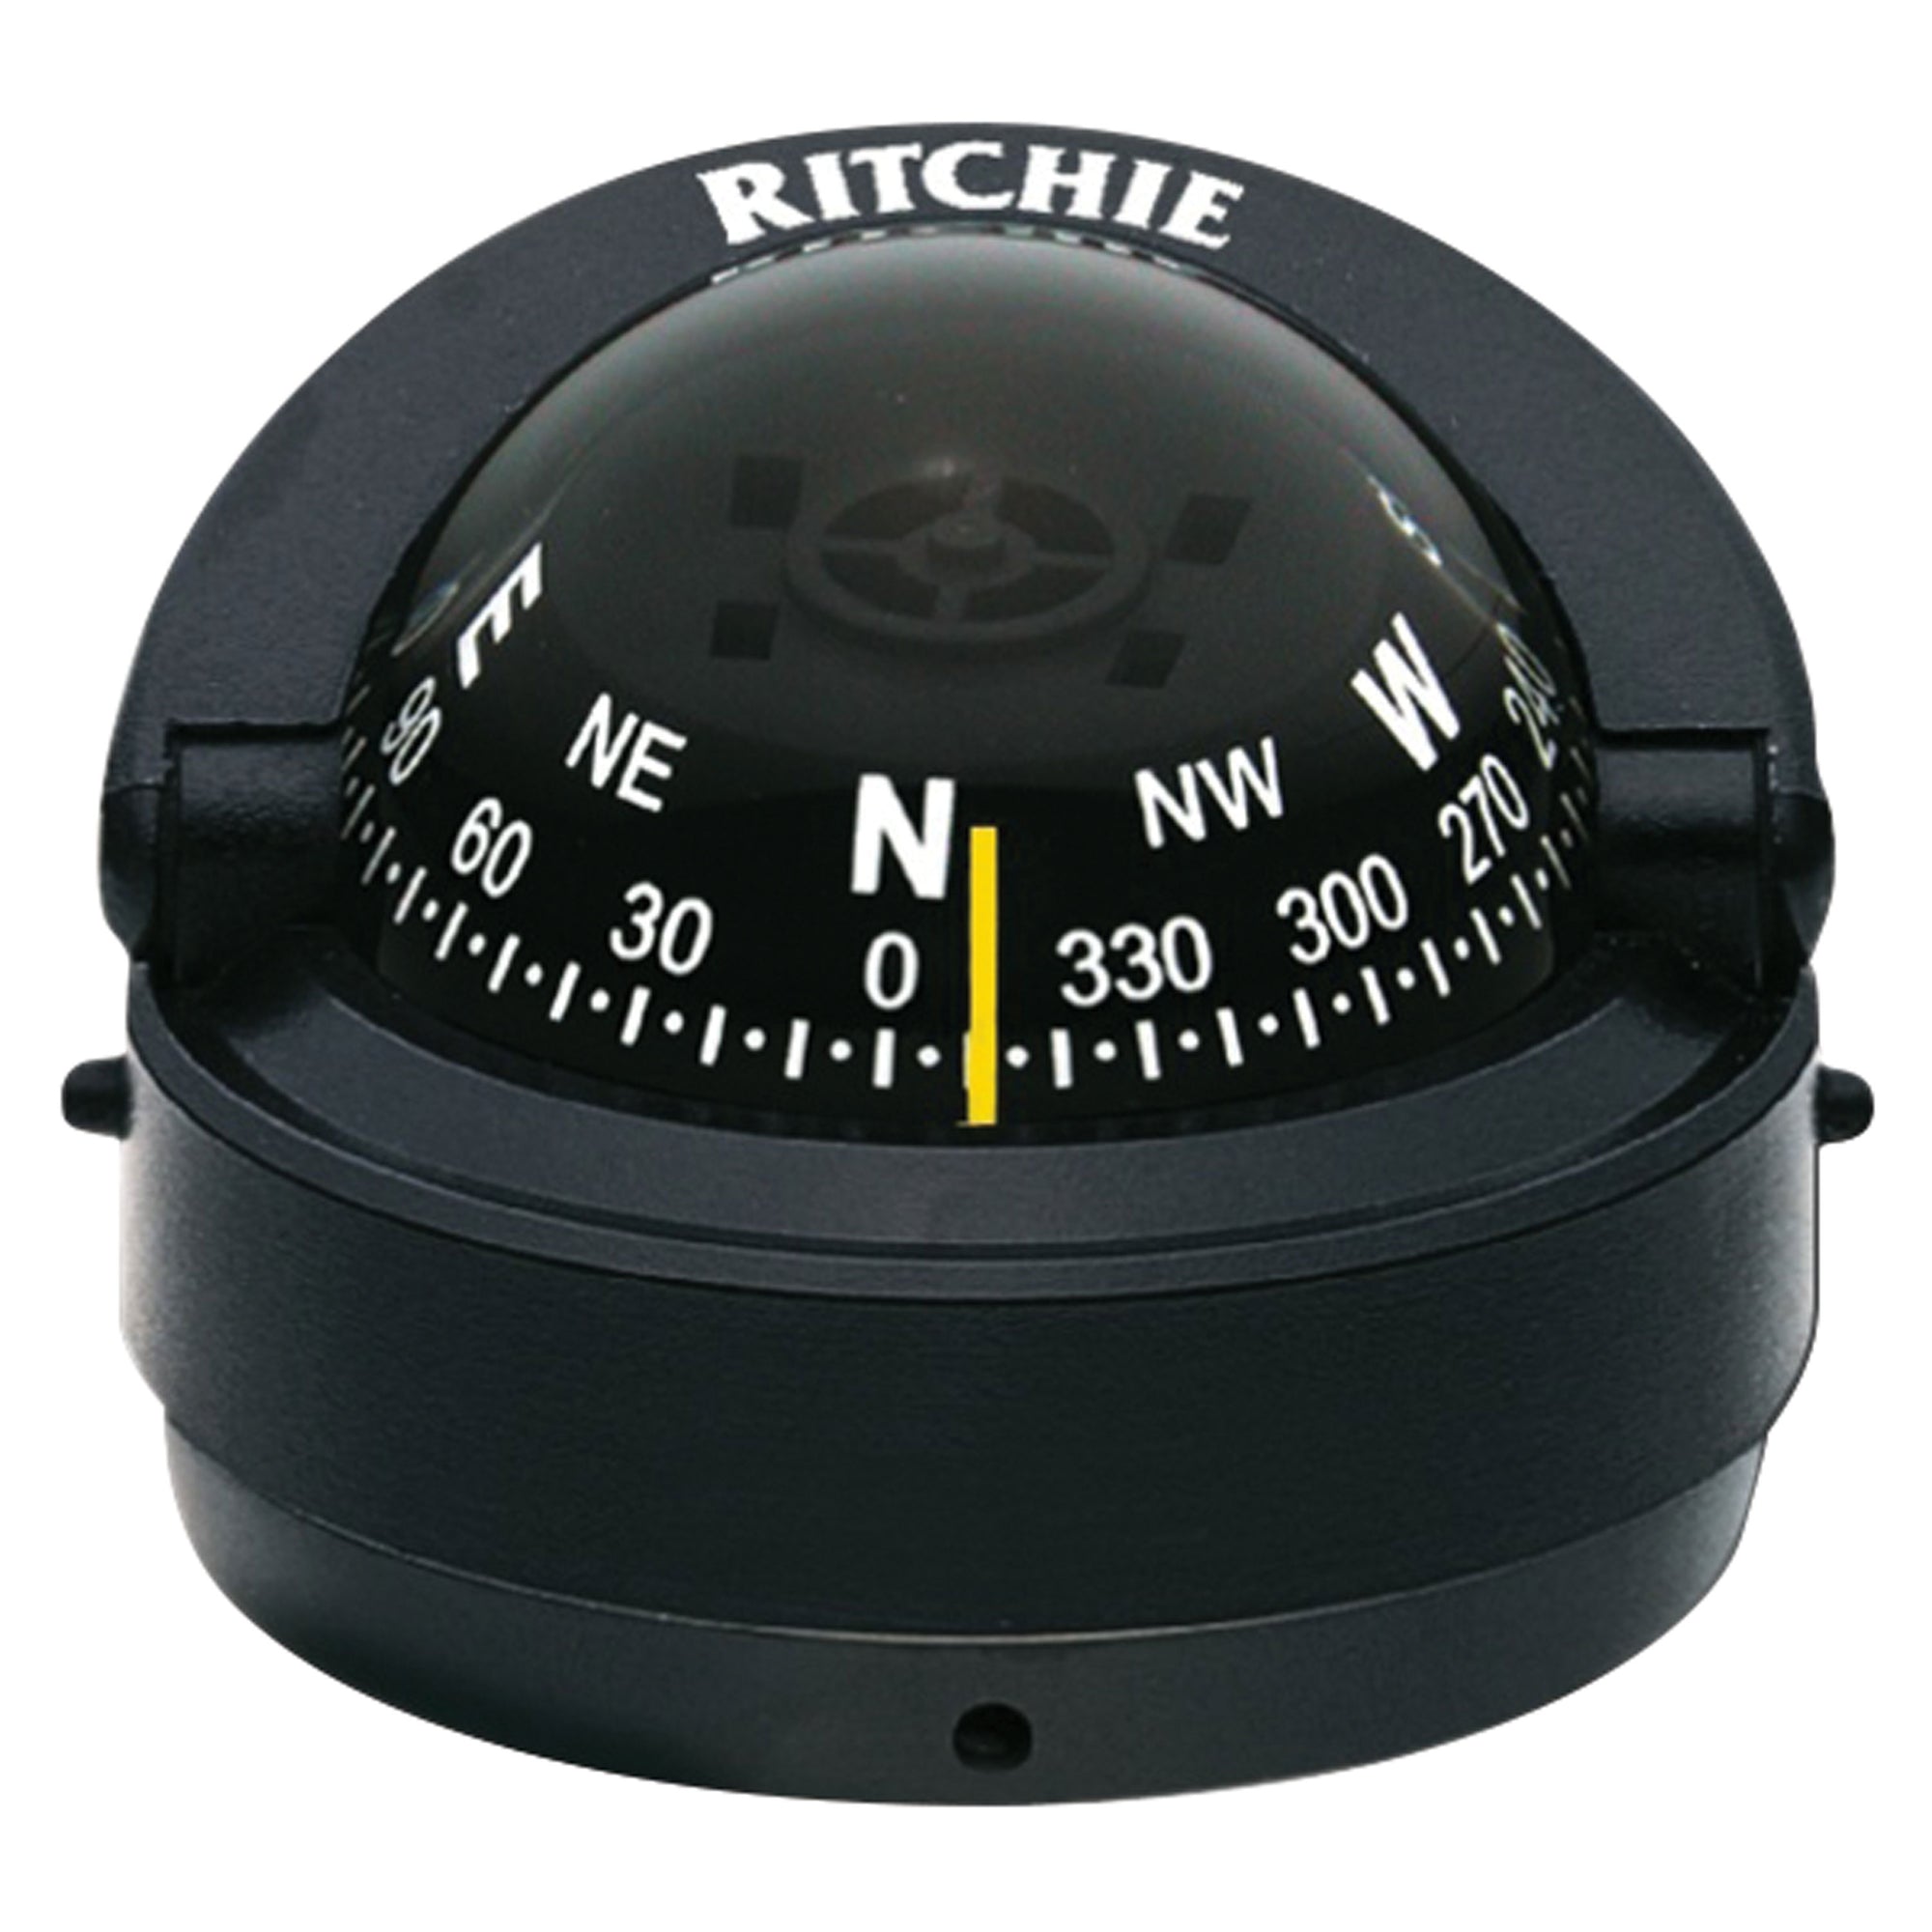 Ritchie Navigation S-53 Explorer Compass - Surface Mount, Black with Black Dial